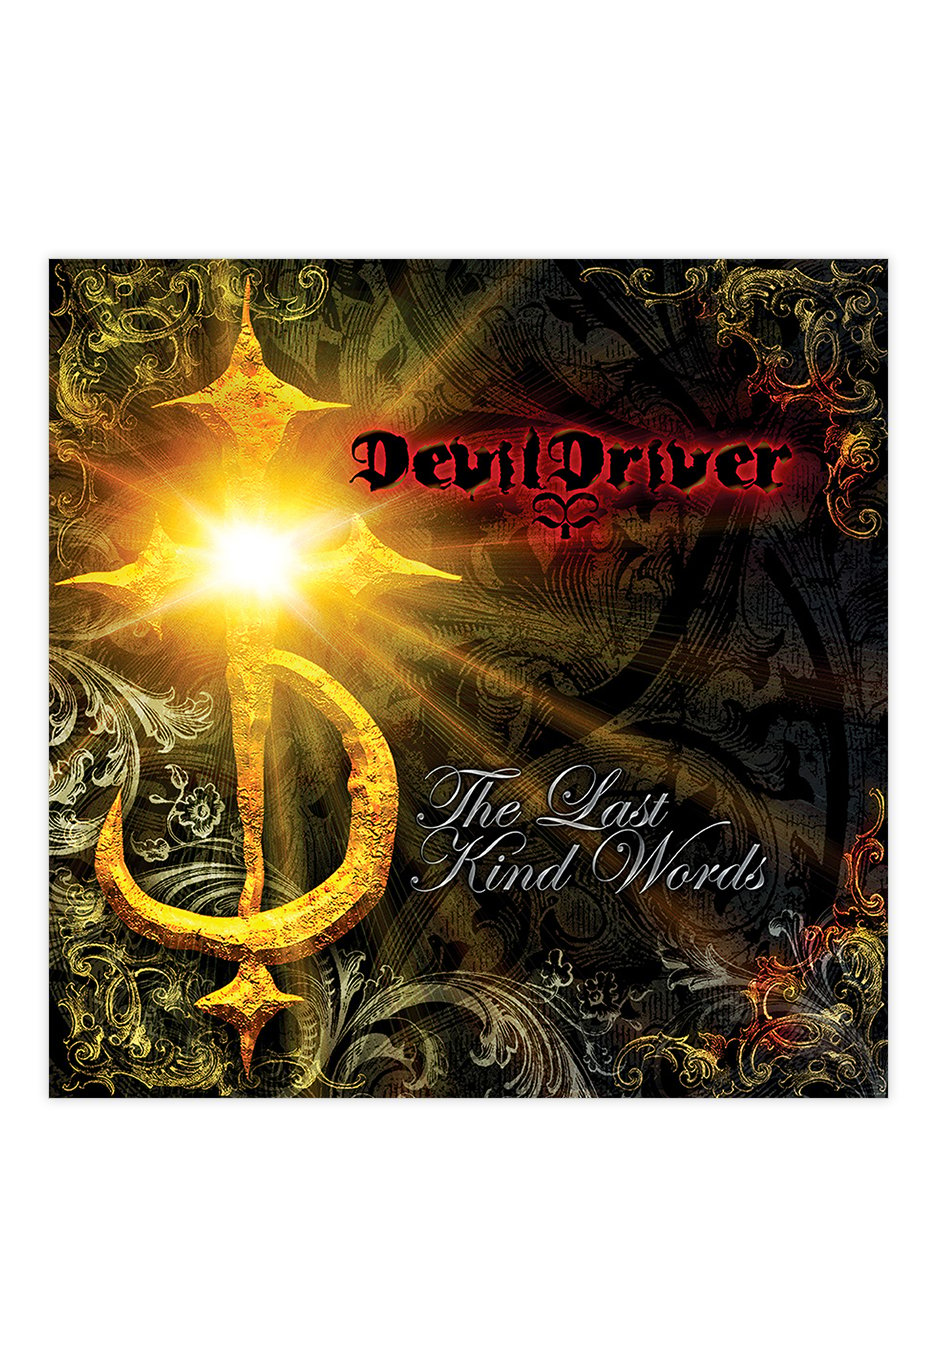 DevilDriver - The Last Kind Words - Digipak CD